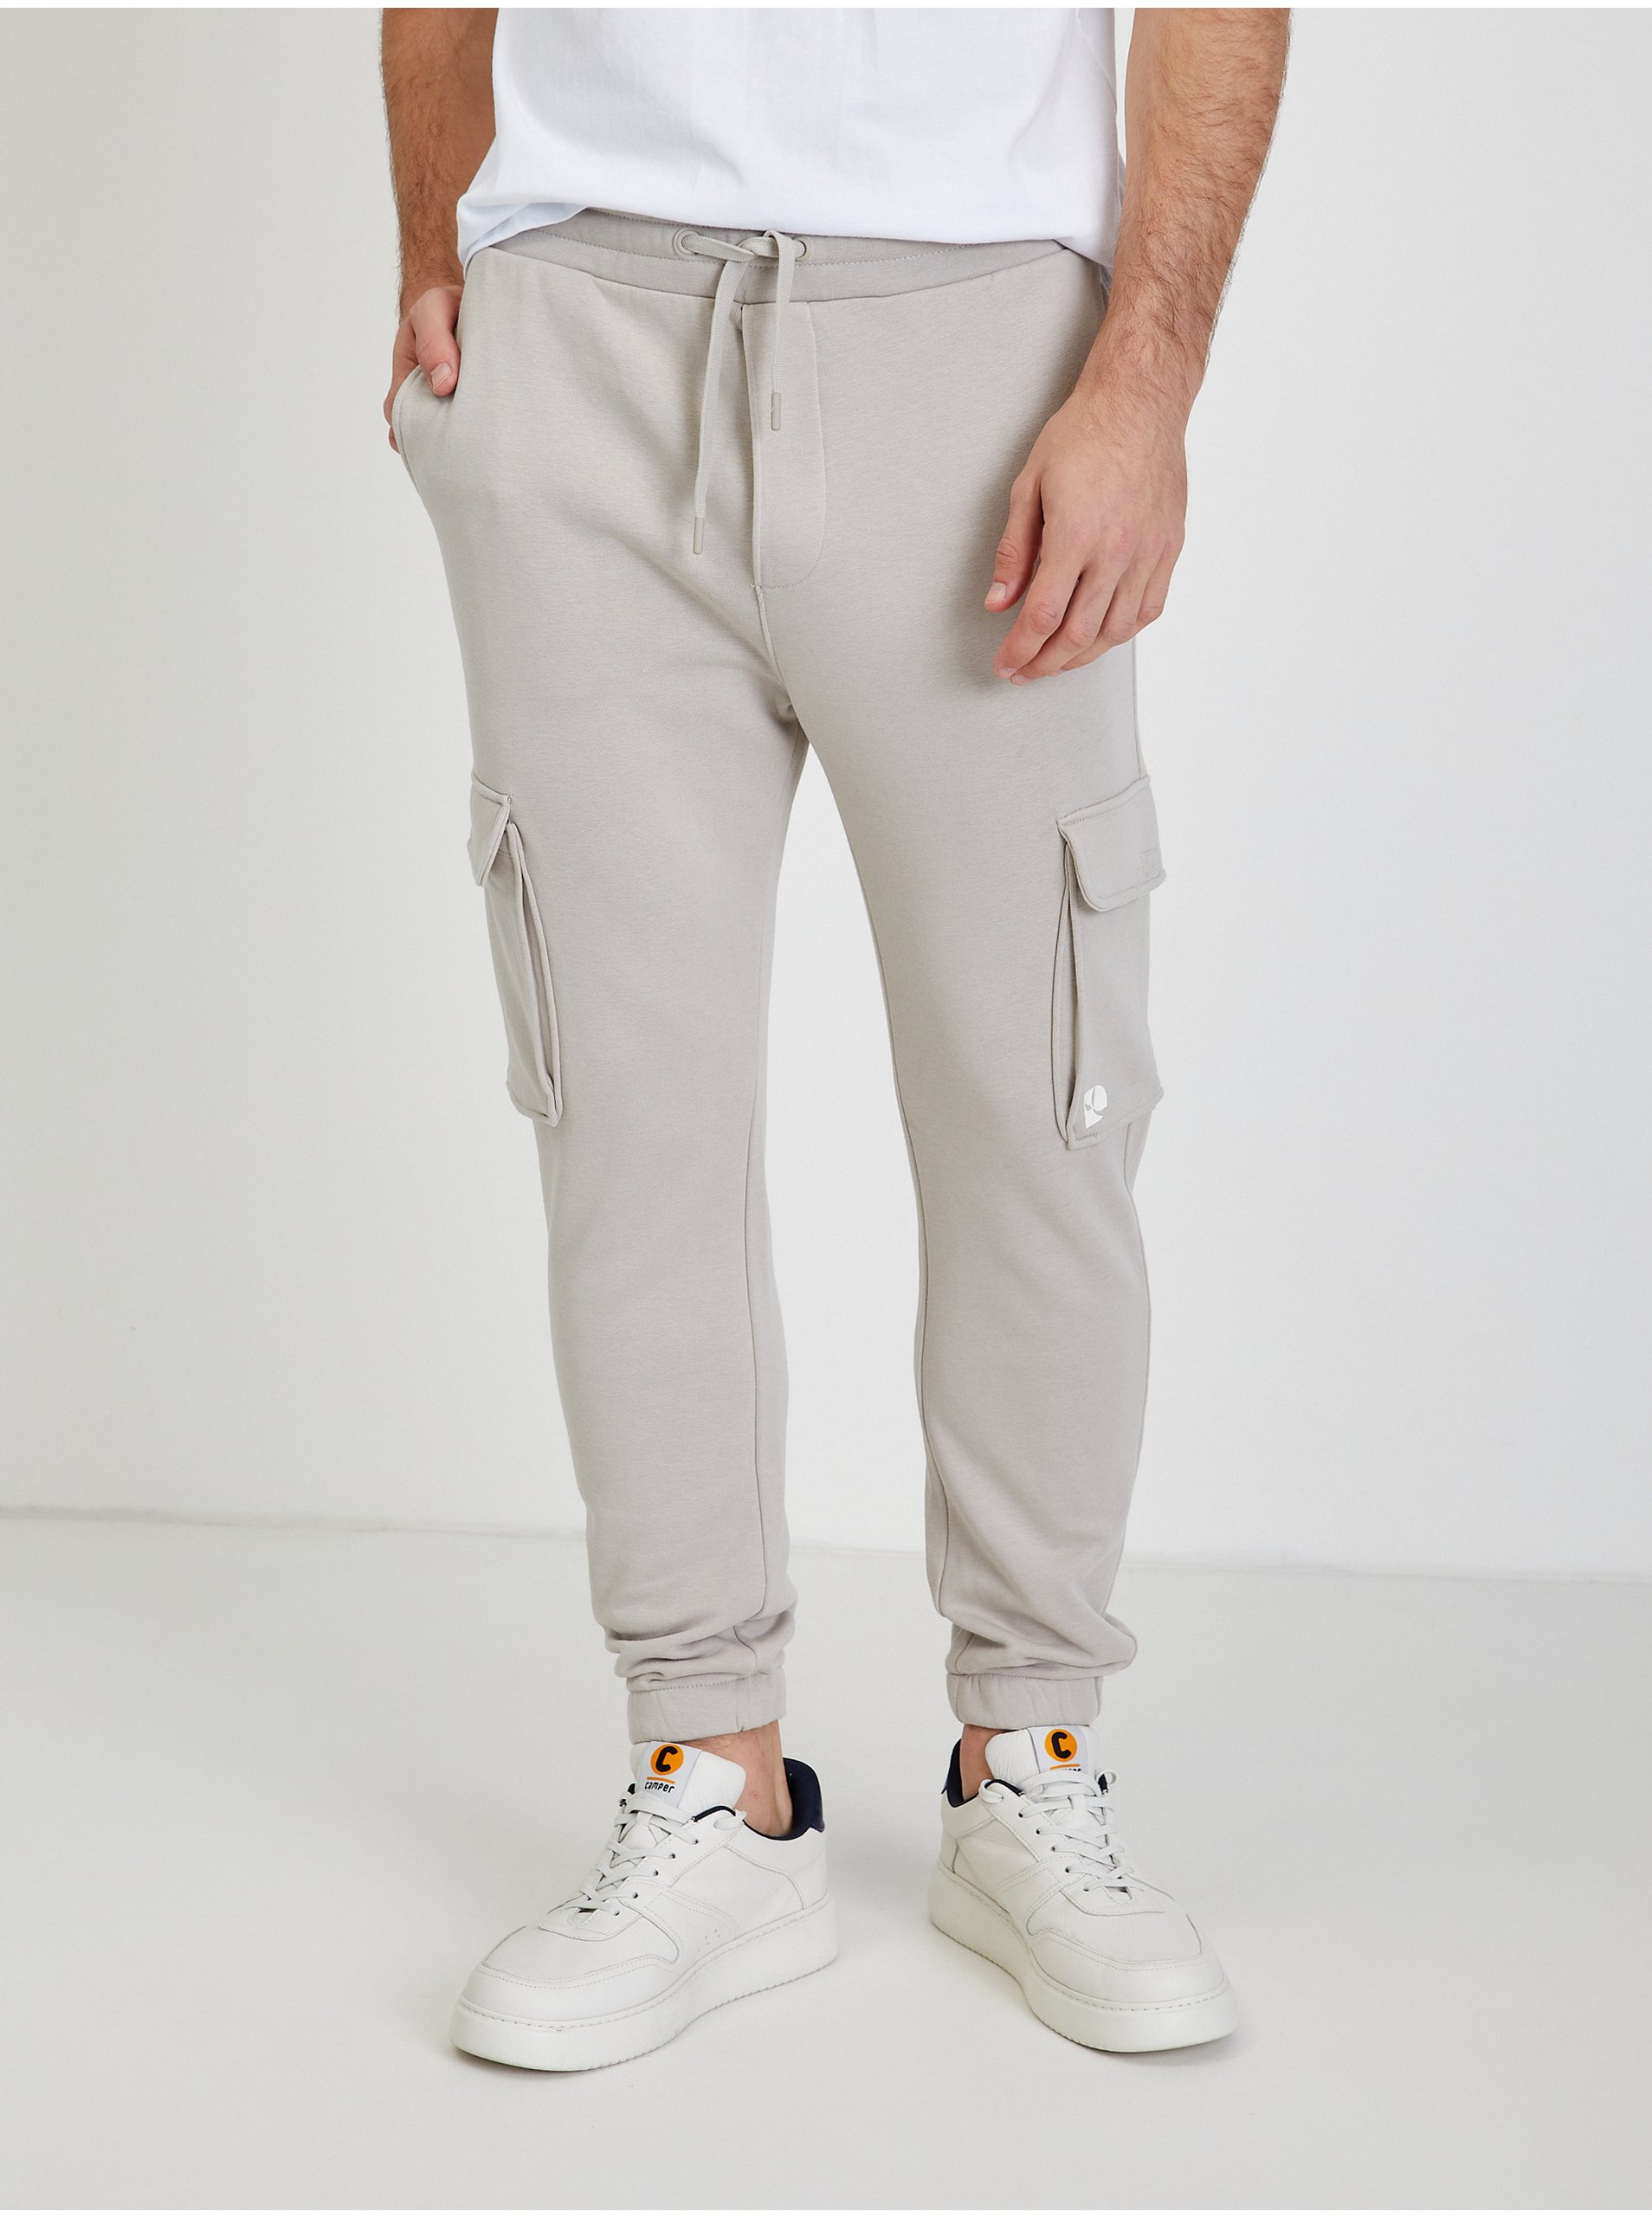 Light gray men's sweatpants with pockets Tom Tailor Denim - Men